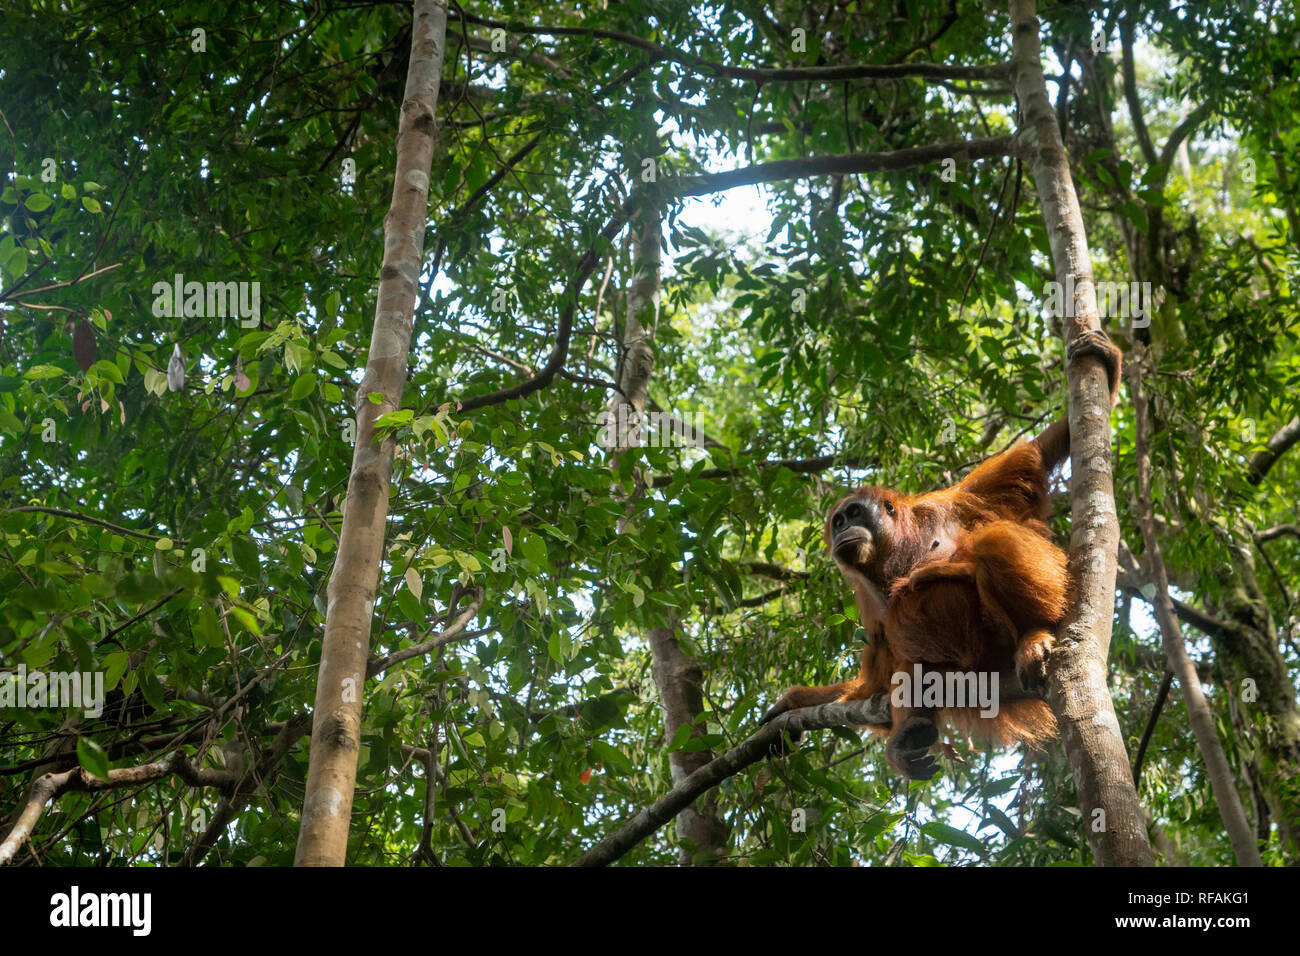 Orangutan giungla in verticale. Semi-wild orangutan femmina nella giungla foresta di pioggia del Bukit Lawang, nel nord di Sumatra, Indonesia. Foto Stock